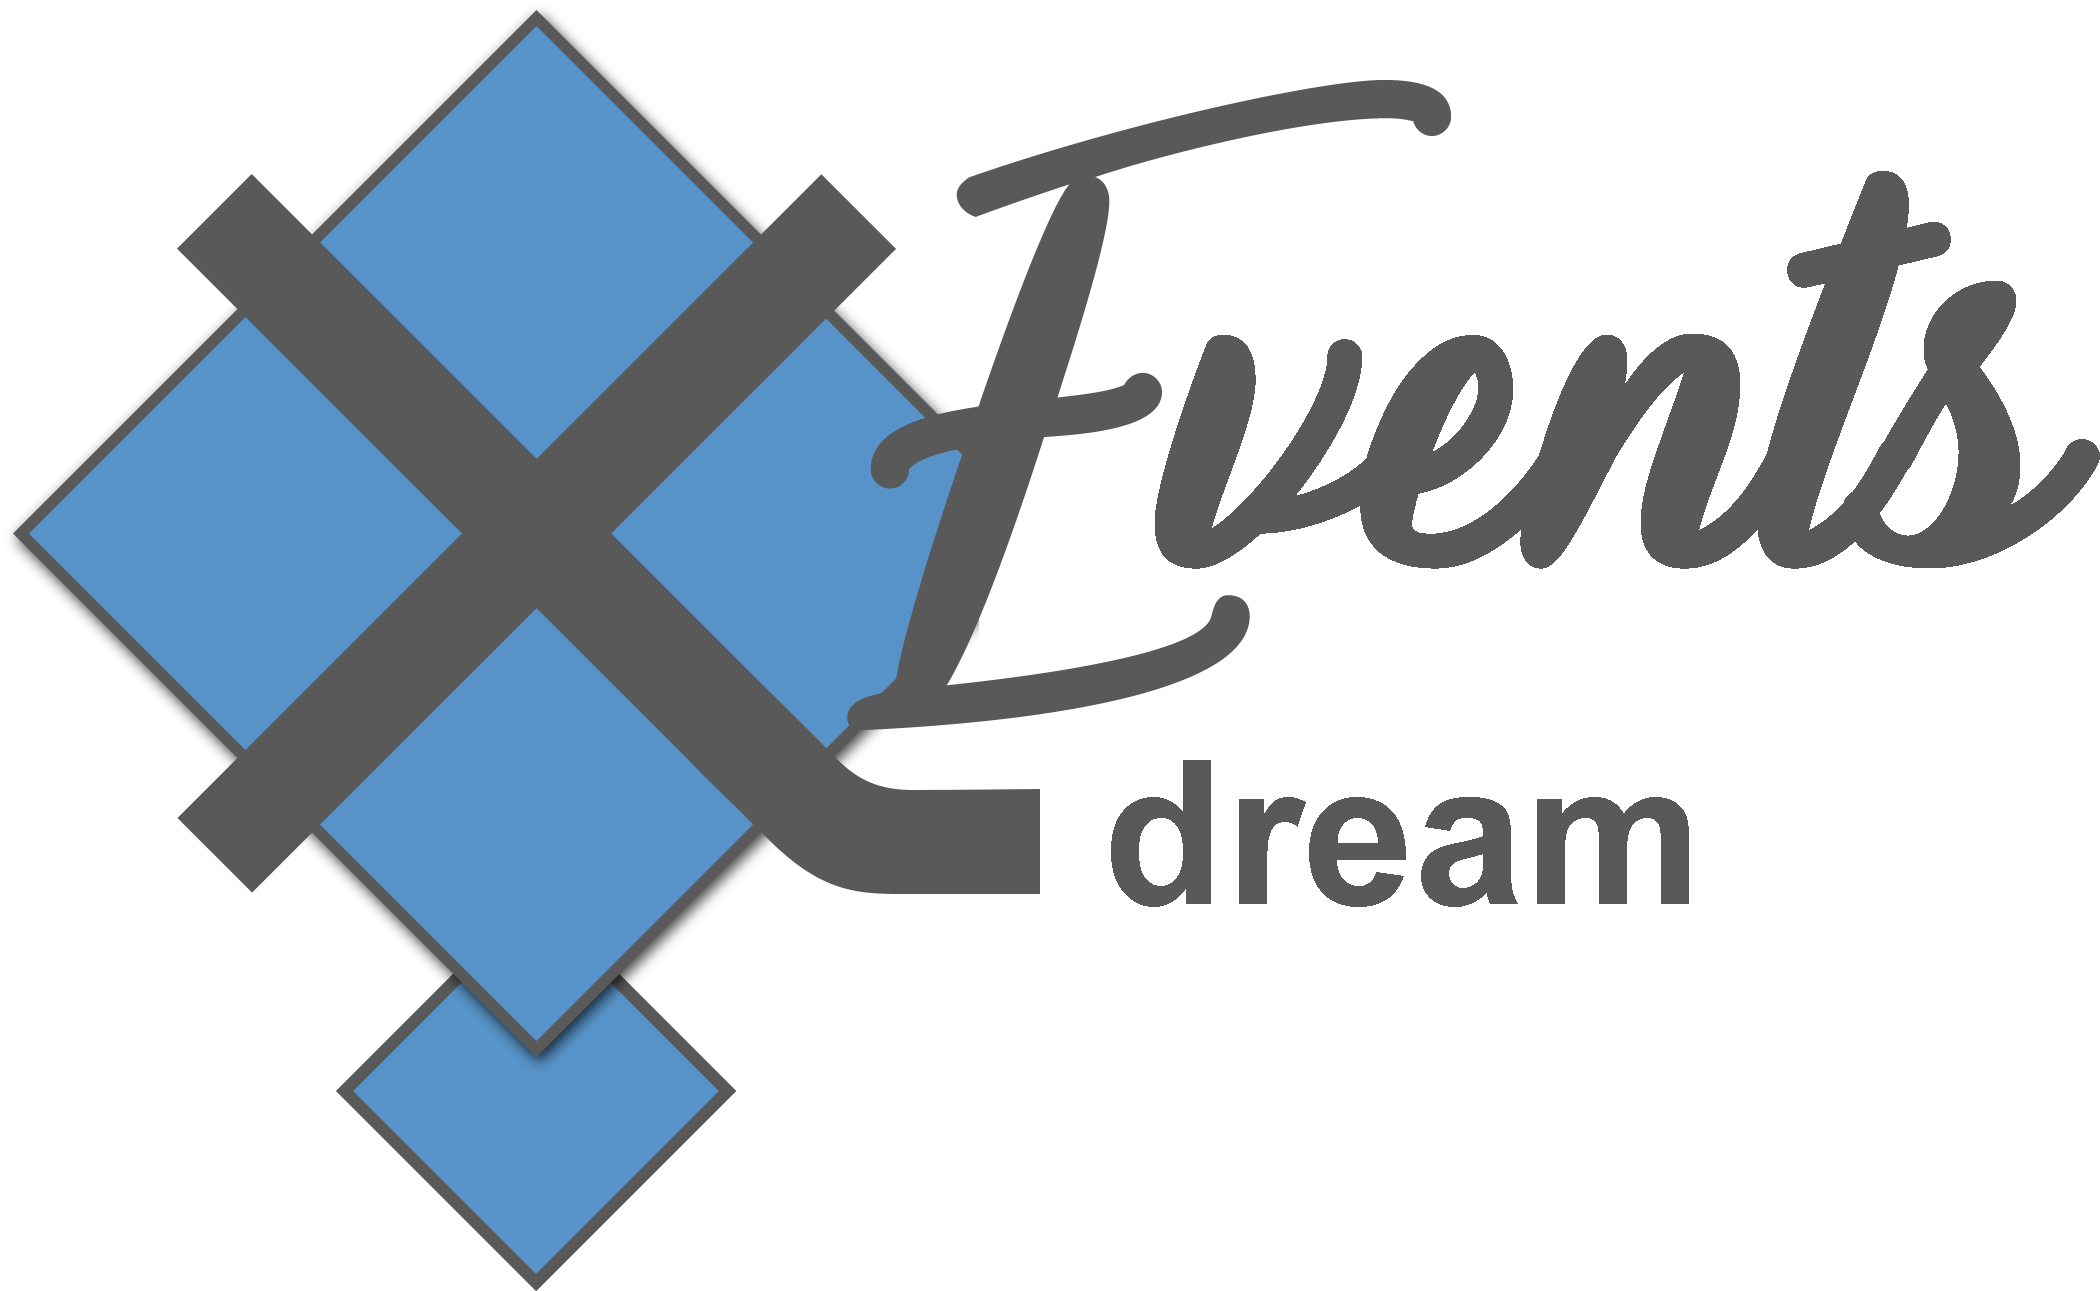 x-dream events